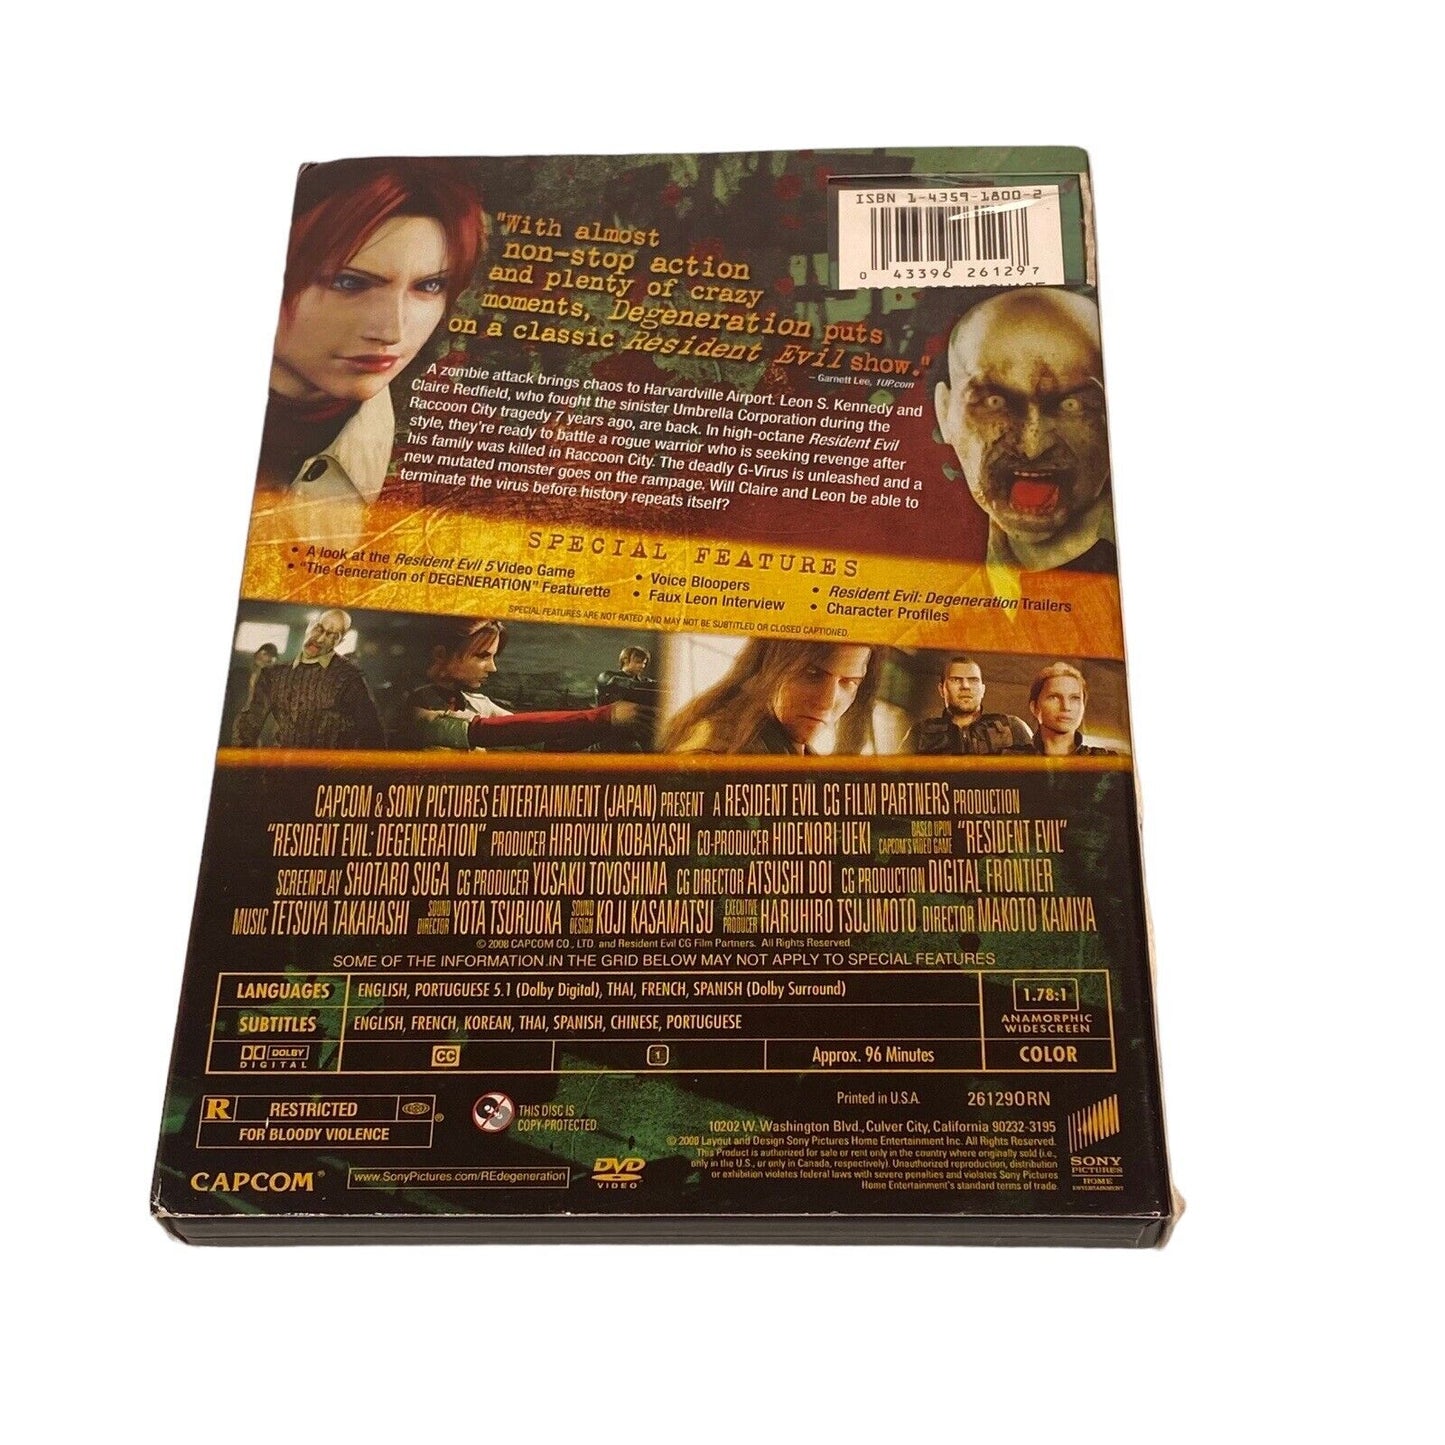 Resident Evil: Degeneration DVD CG Motion Picture Zombies Horror